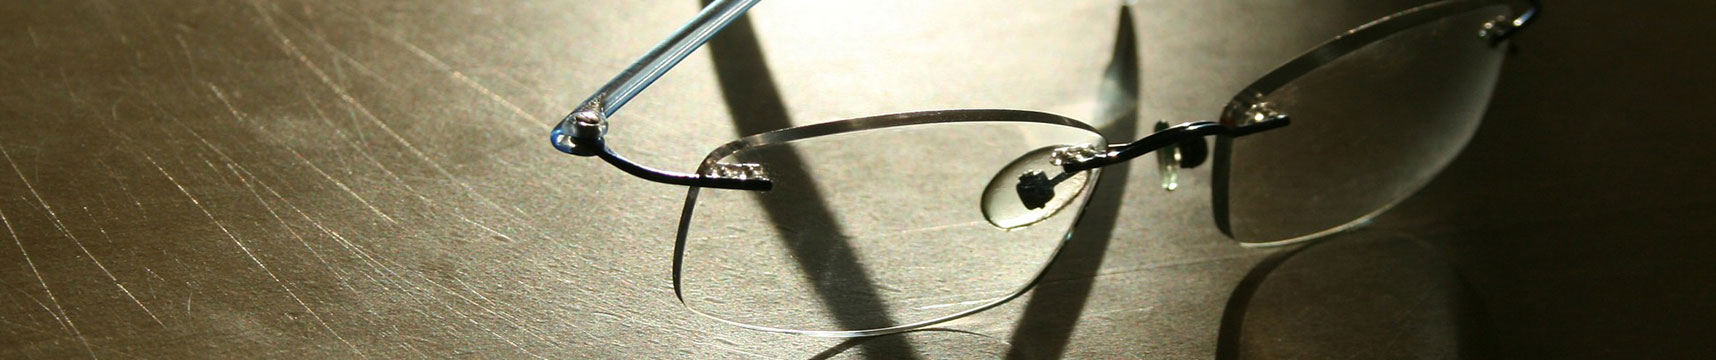 Focus Optic Simeria & Deva: comercializeaza ochelari cu lentile pe capse sau suruburi